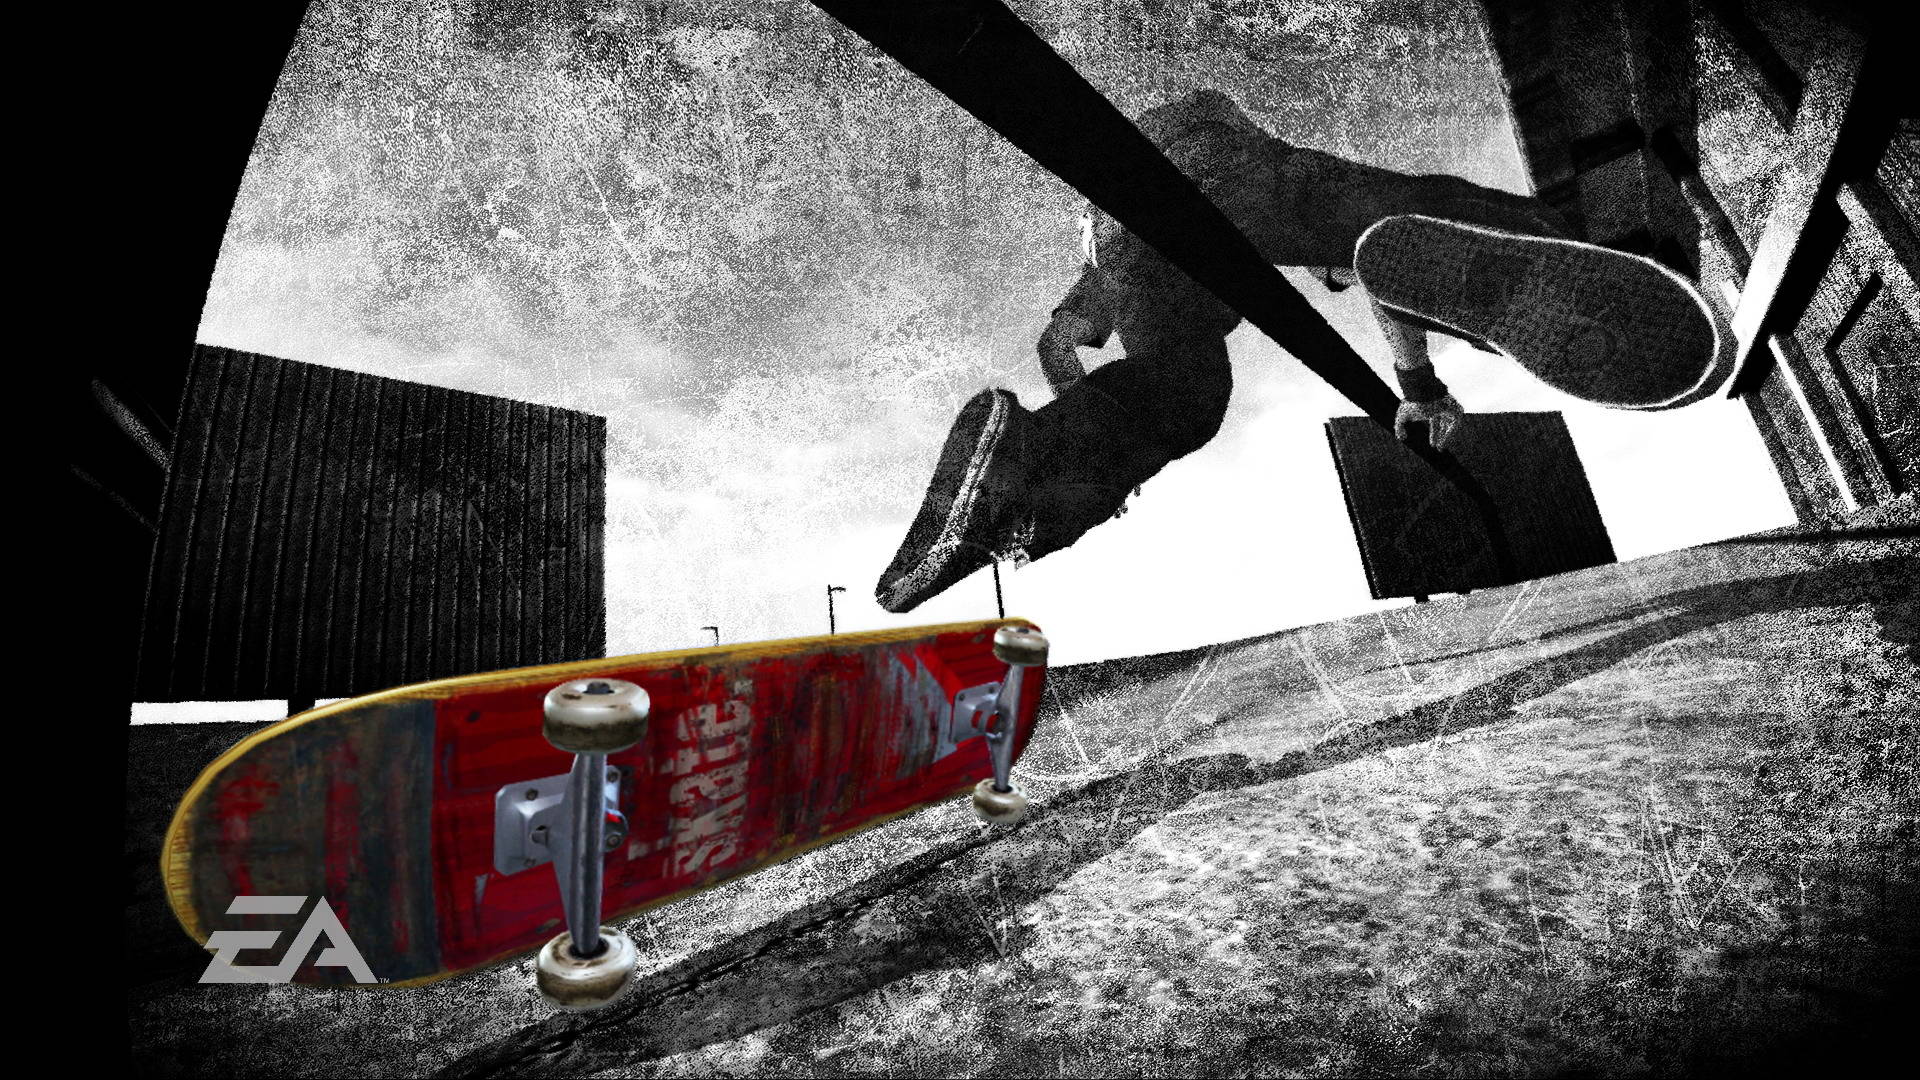 Skateboarding Wallpaper 1080p Background Free Download 61916 Label